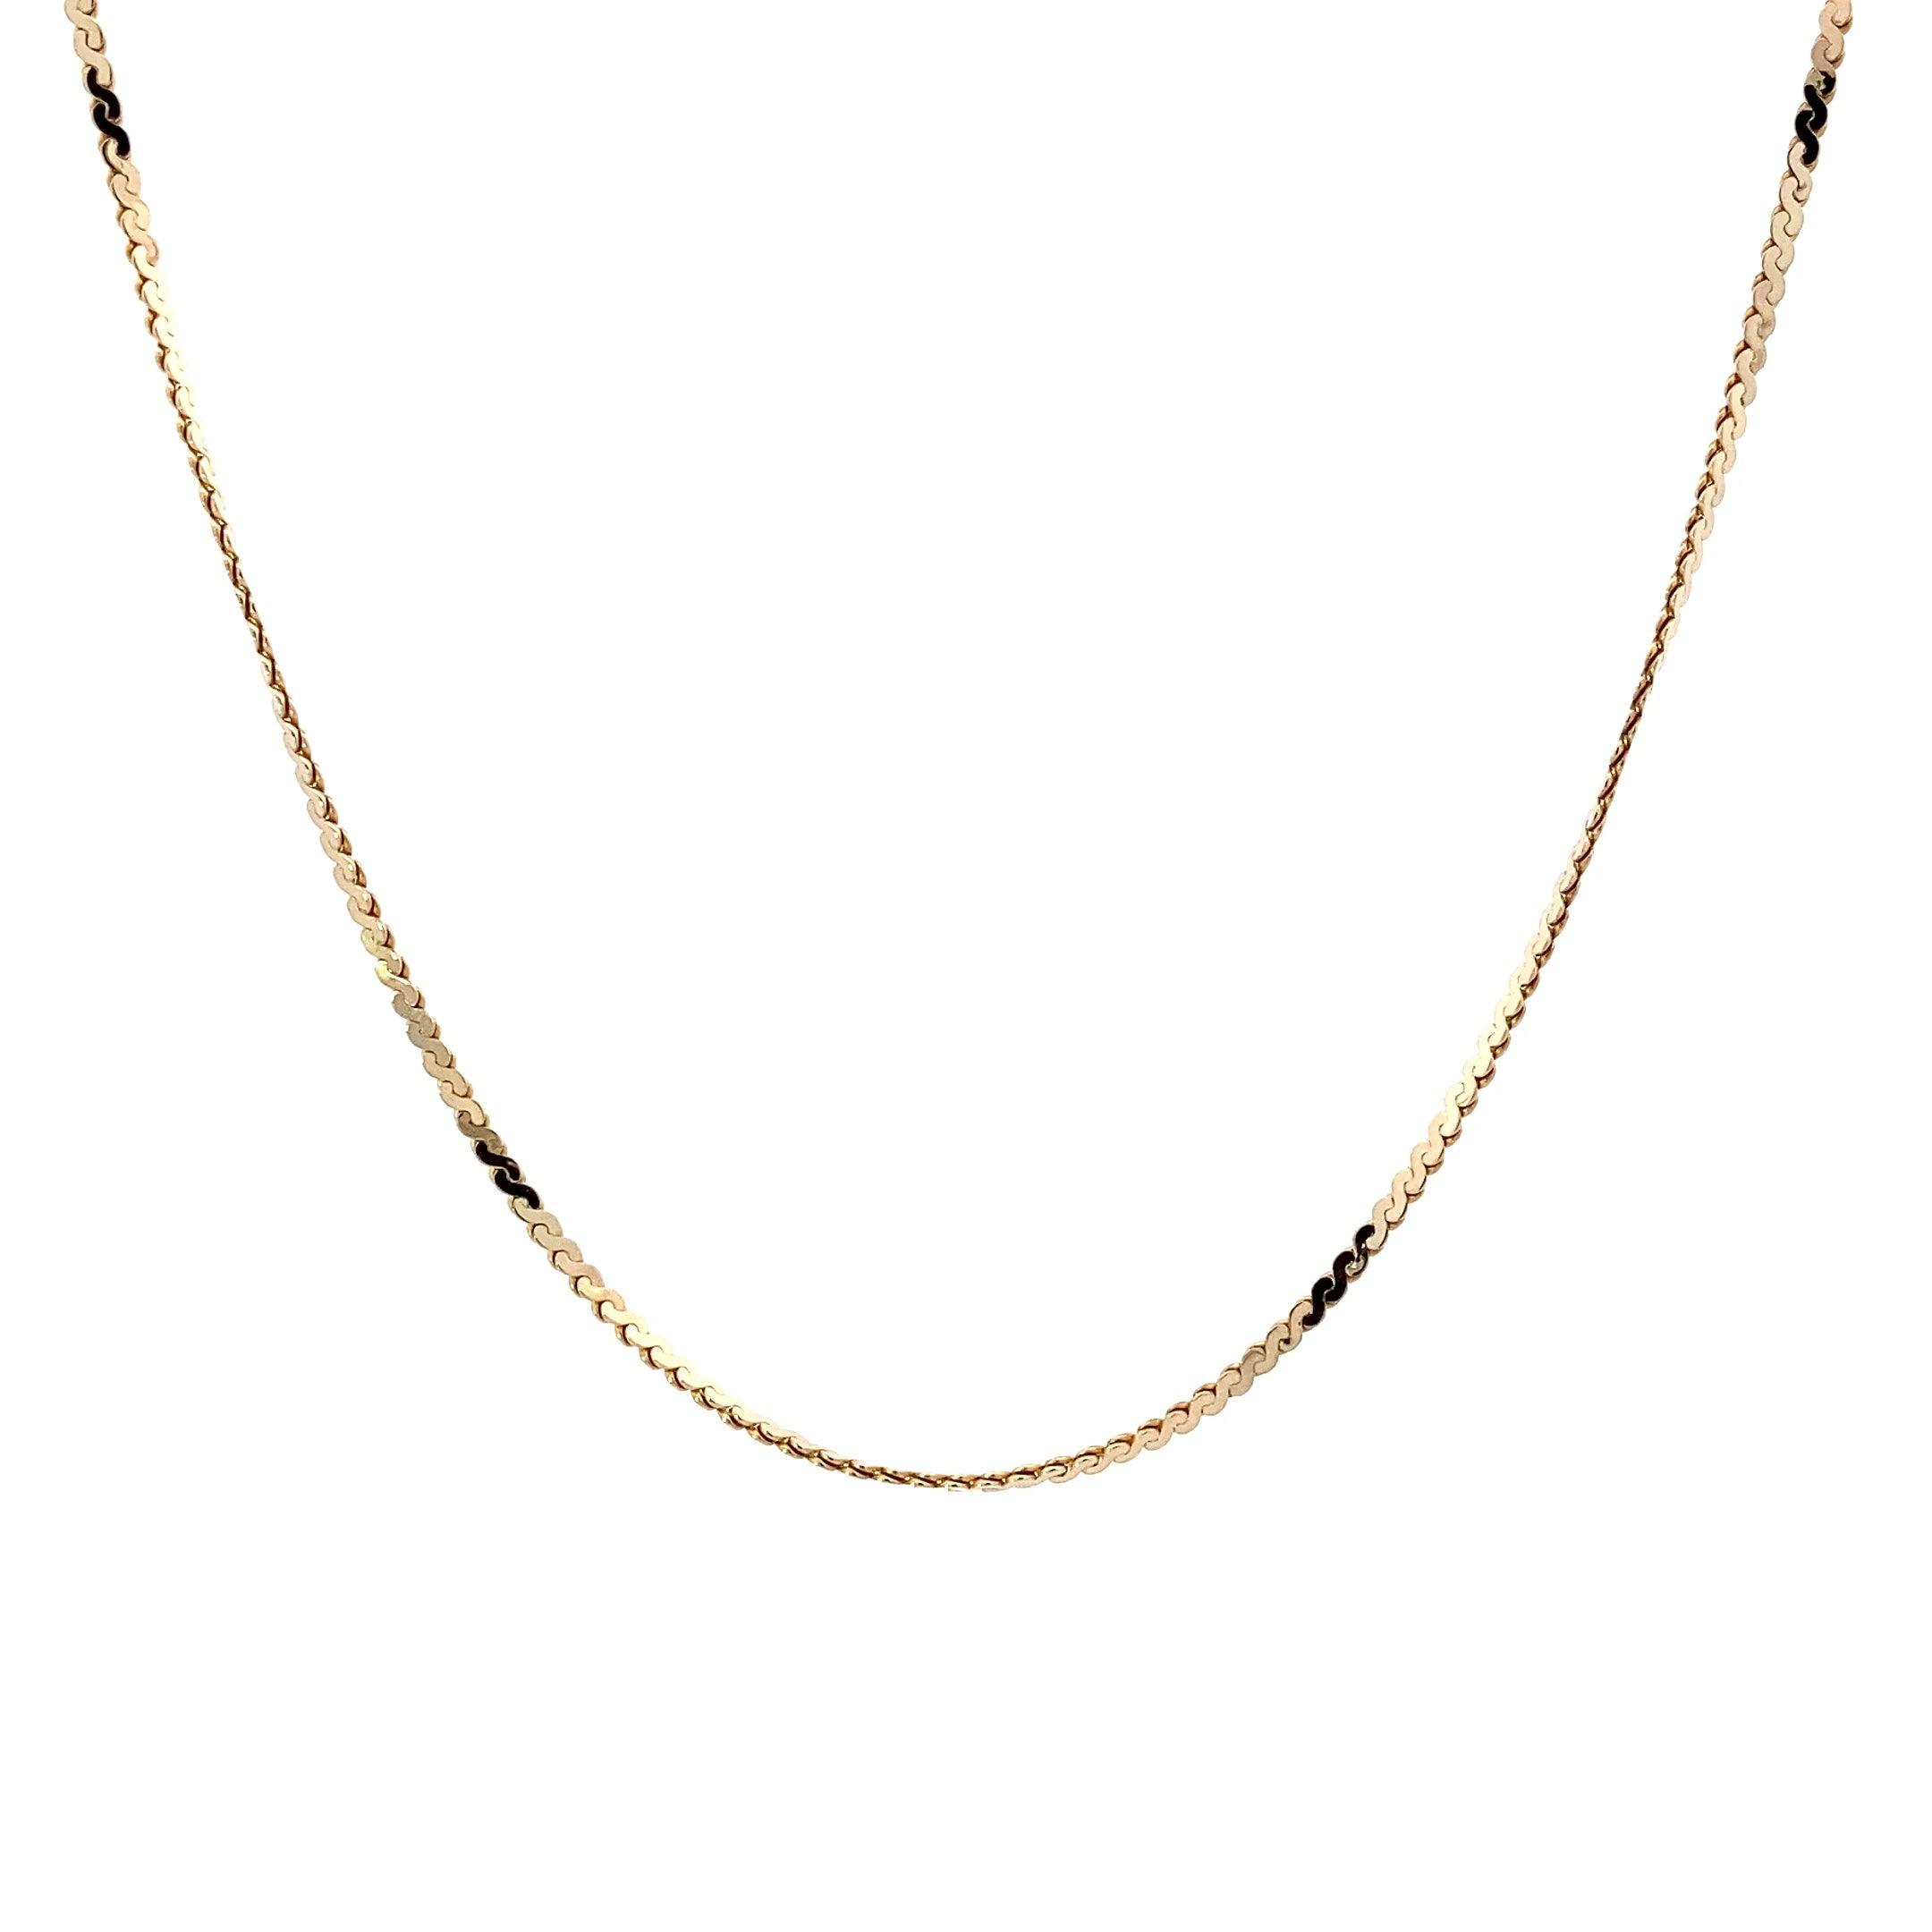 Large Serpentine Chain Necklace in 18k Gold Vermeil | Kendra Scott